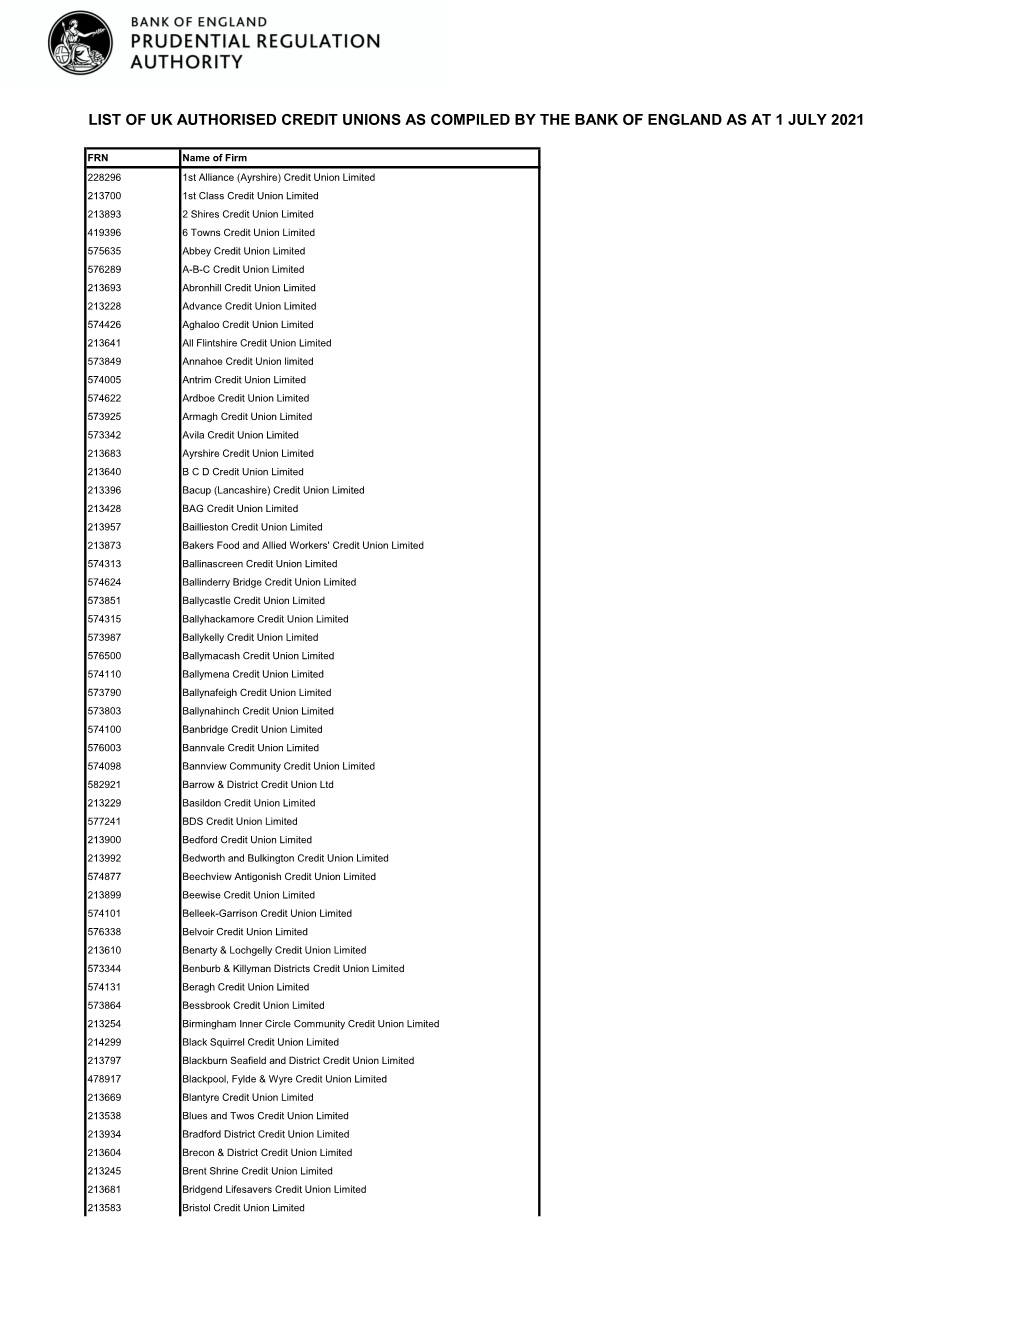 List of Authorised Credit Unions